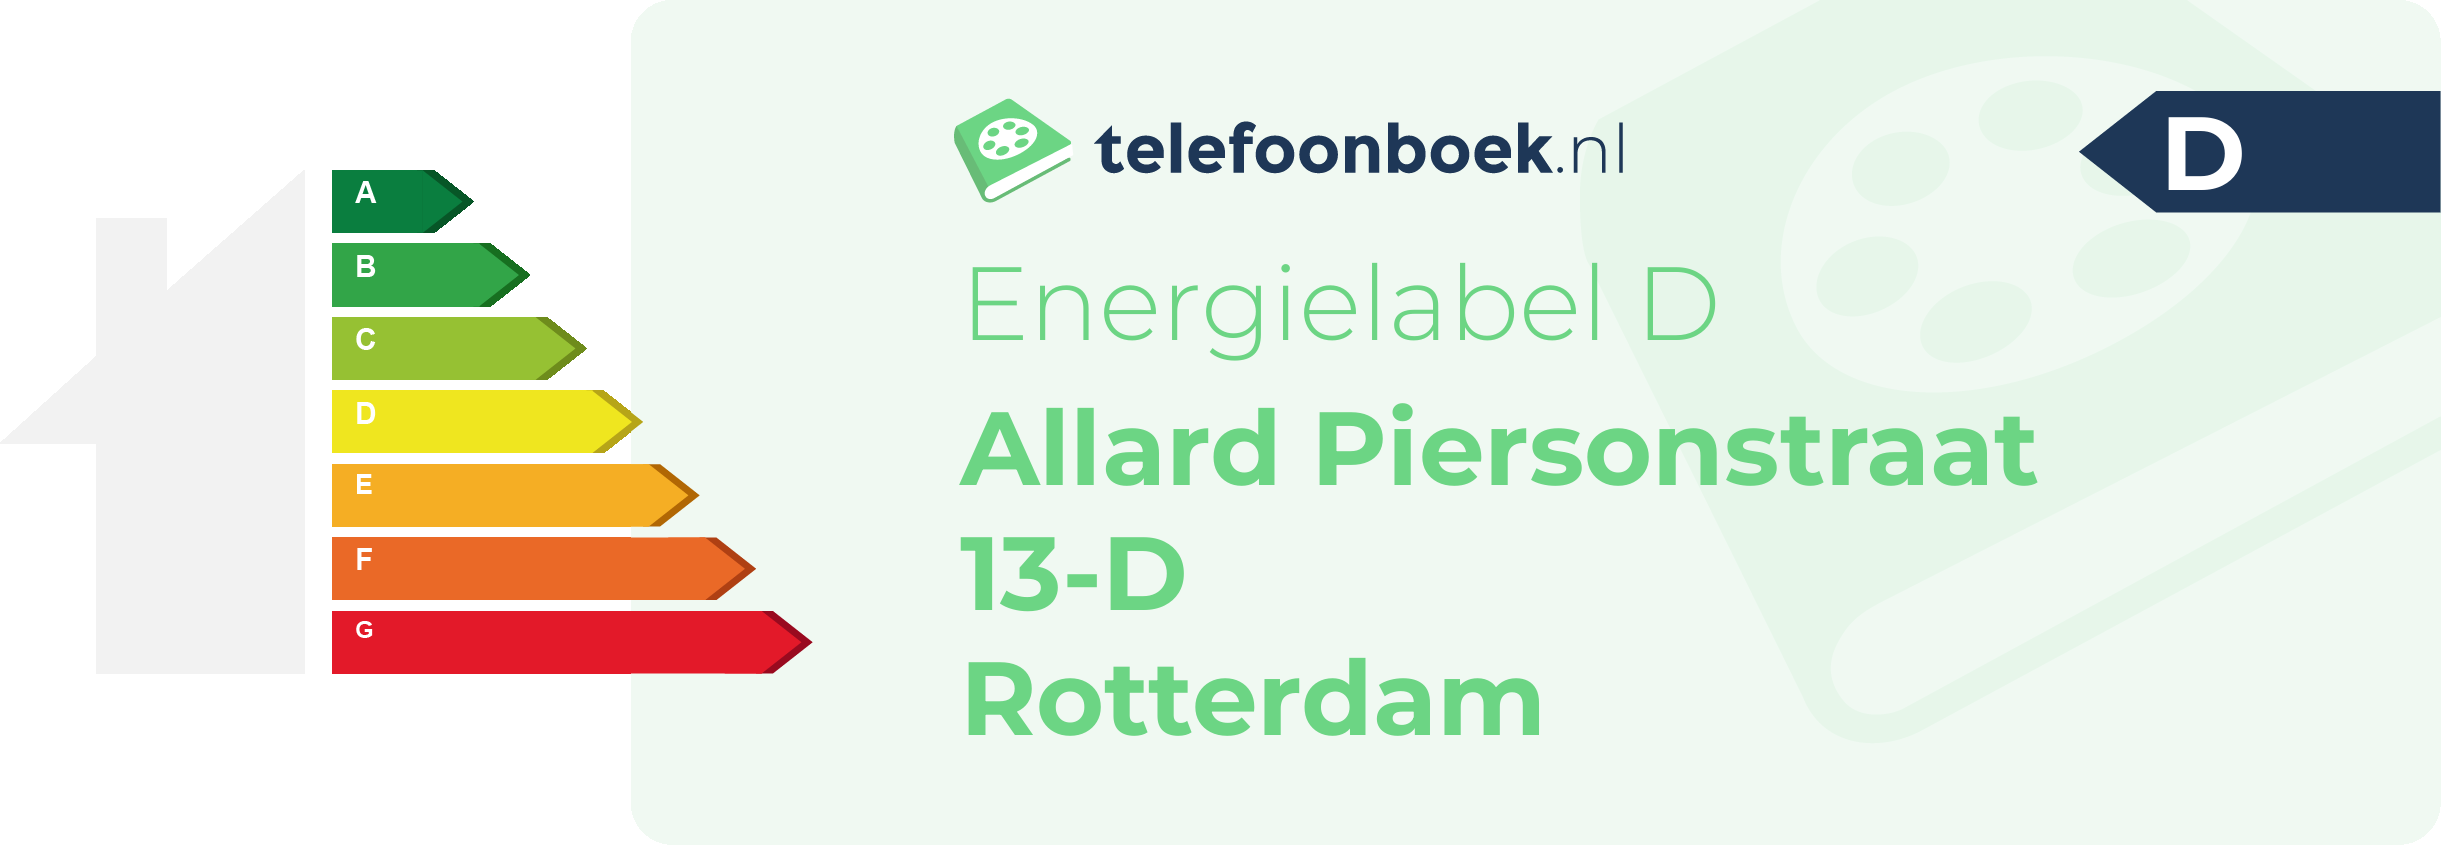 Energielabel Allard Piersonstraat 13-D Rotterdam